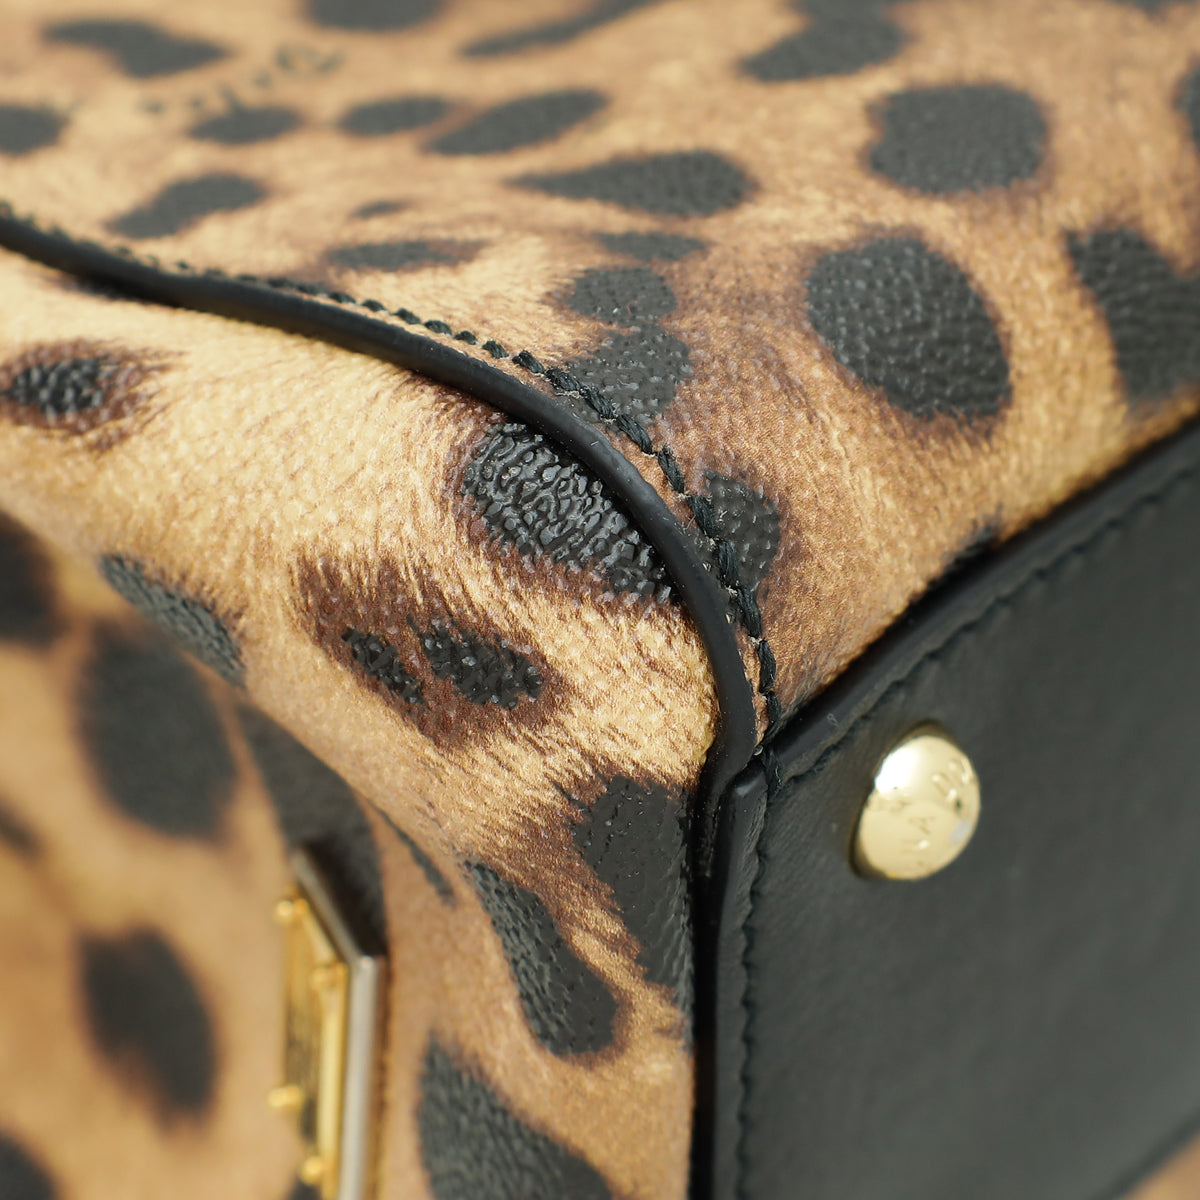 Dolce & Gabbana Bicolor Leopard Print Sicily Shopper Medium Bag